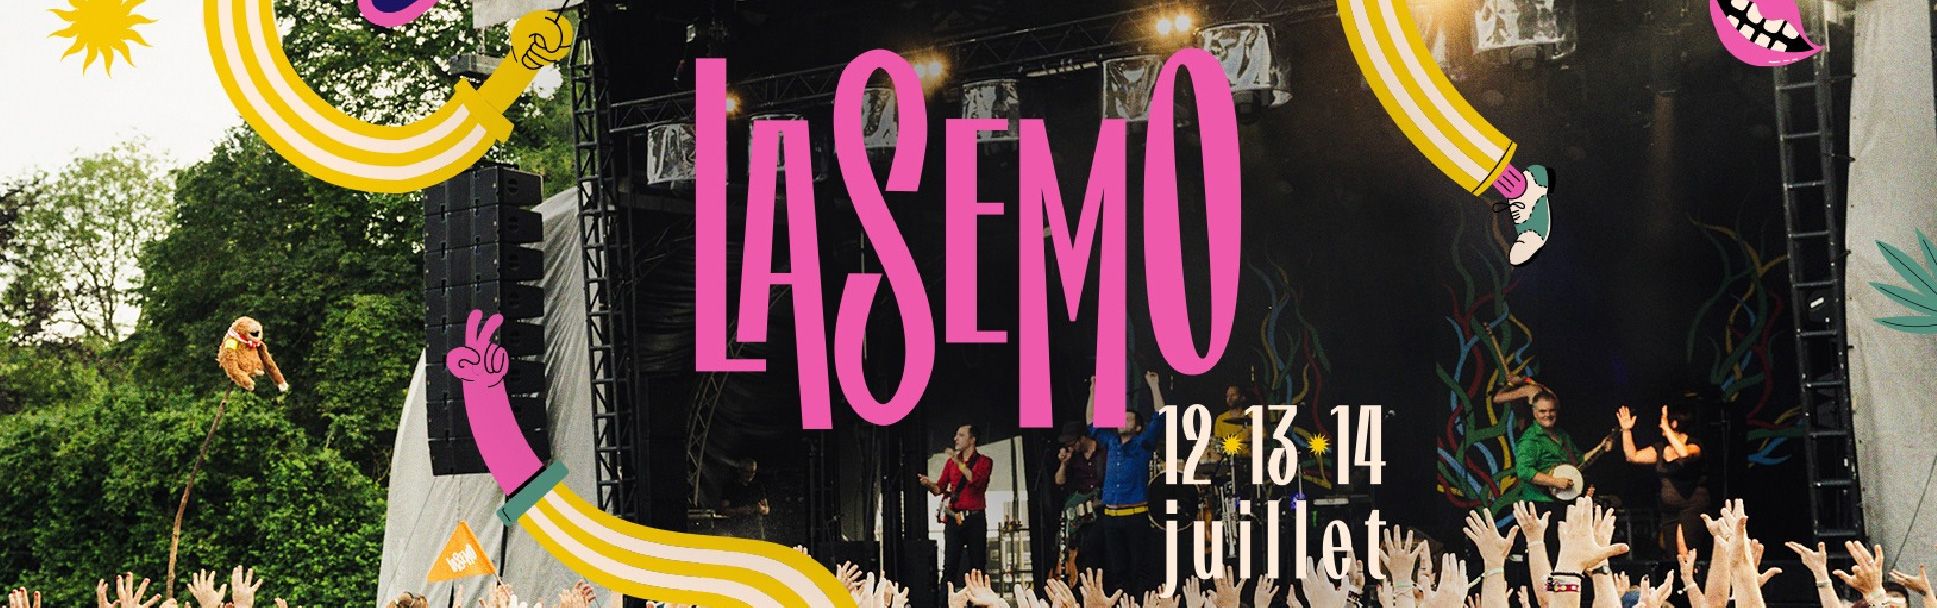 LaSemo Festival header